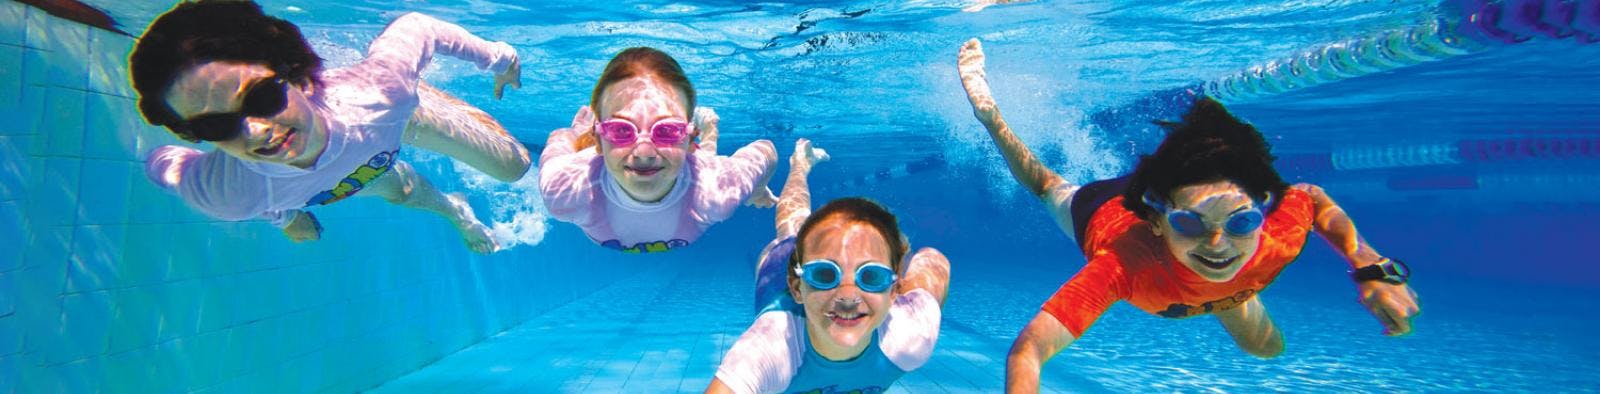 Kids swimming in a pool 